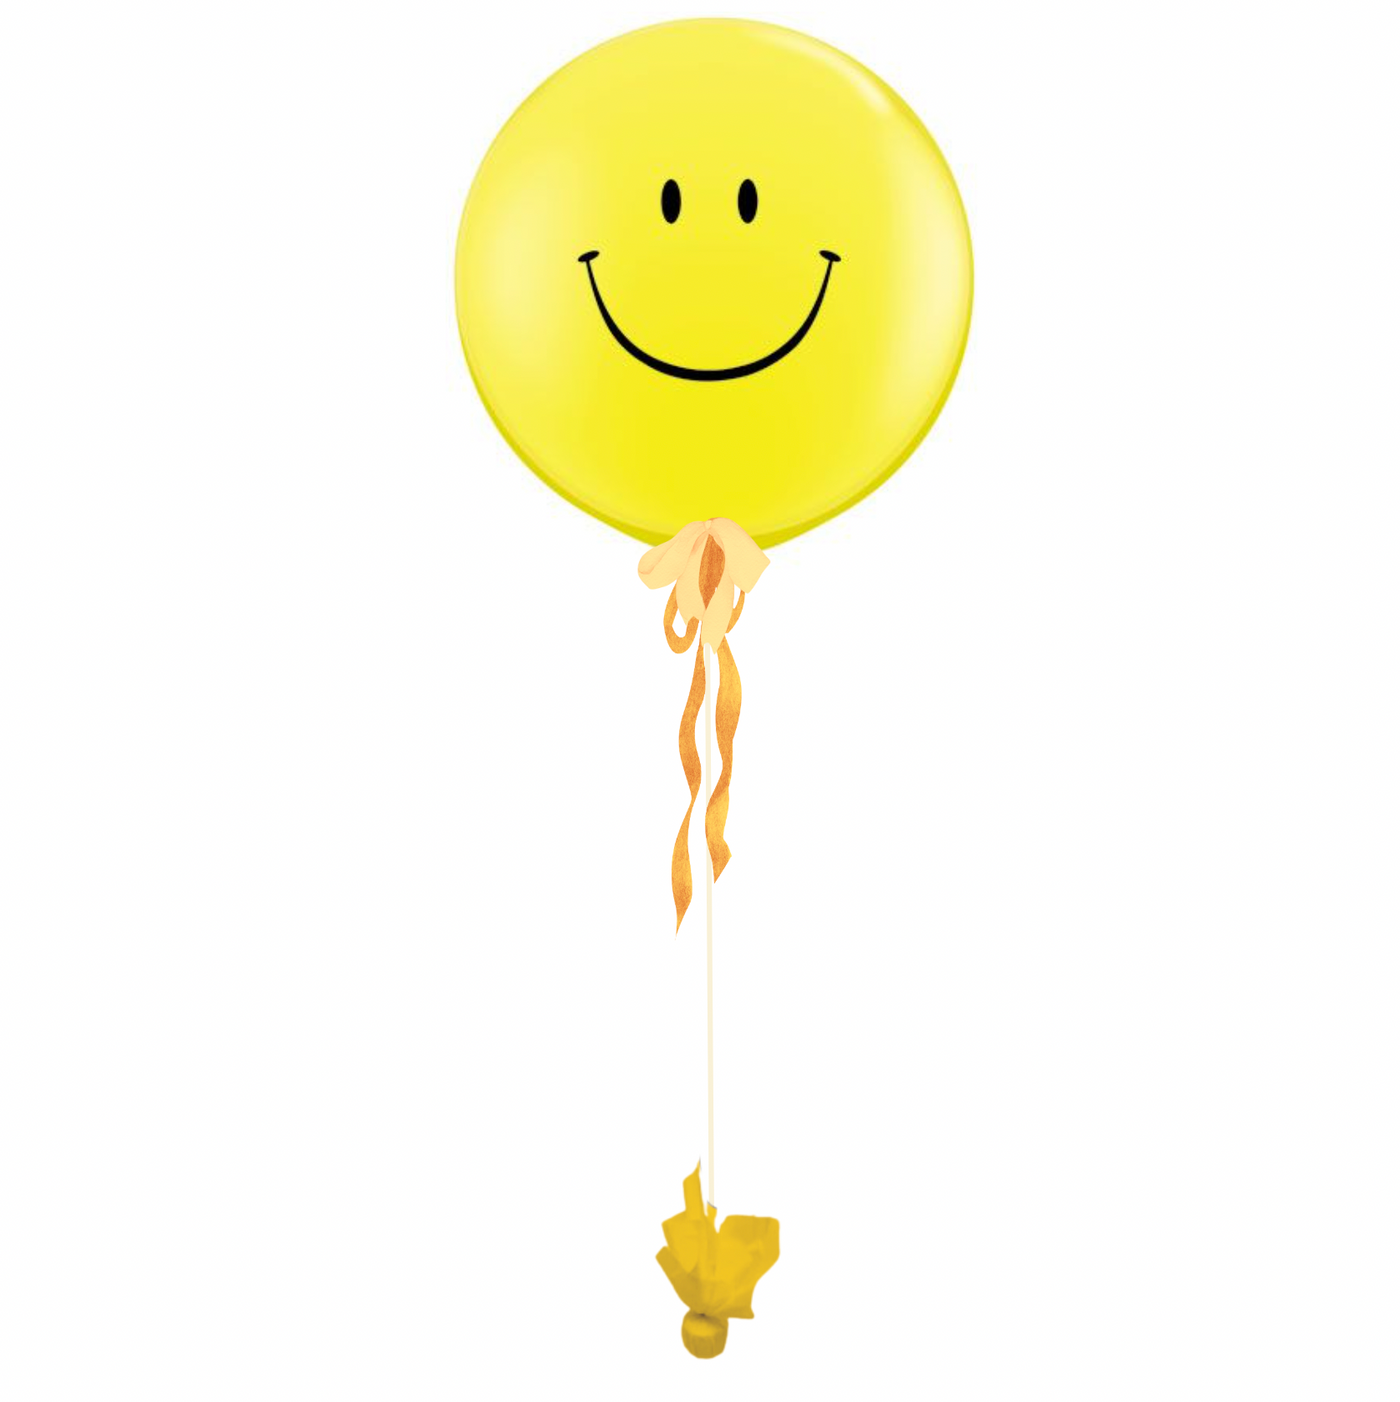 Sending A Smile Giant Gift Balloon